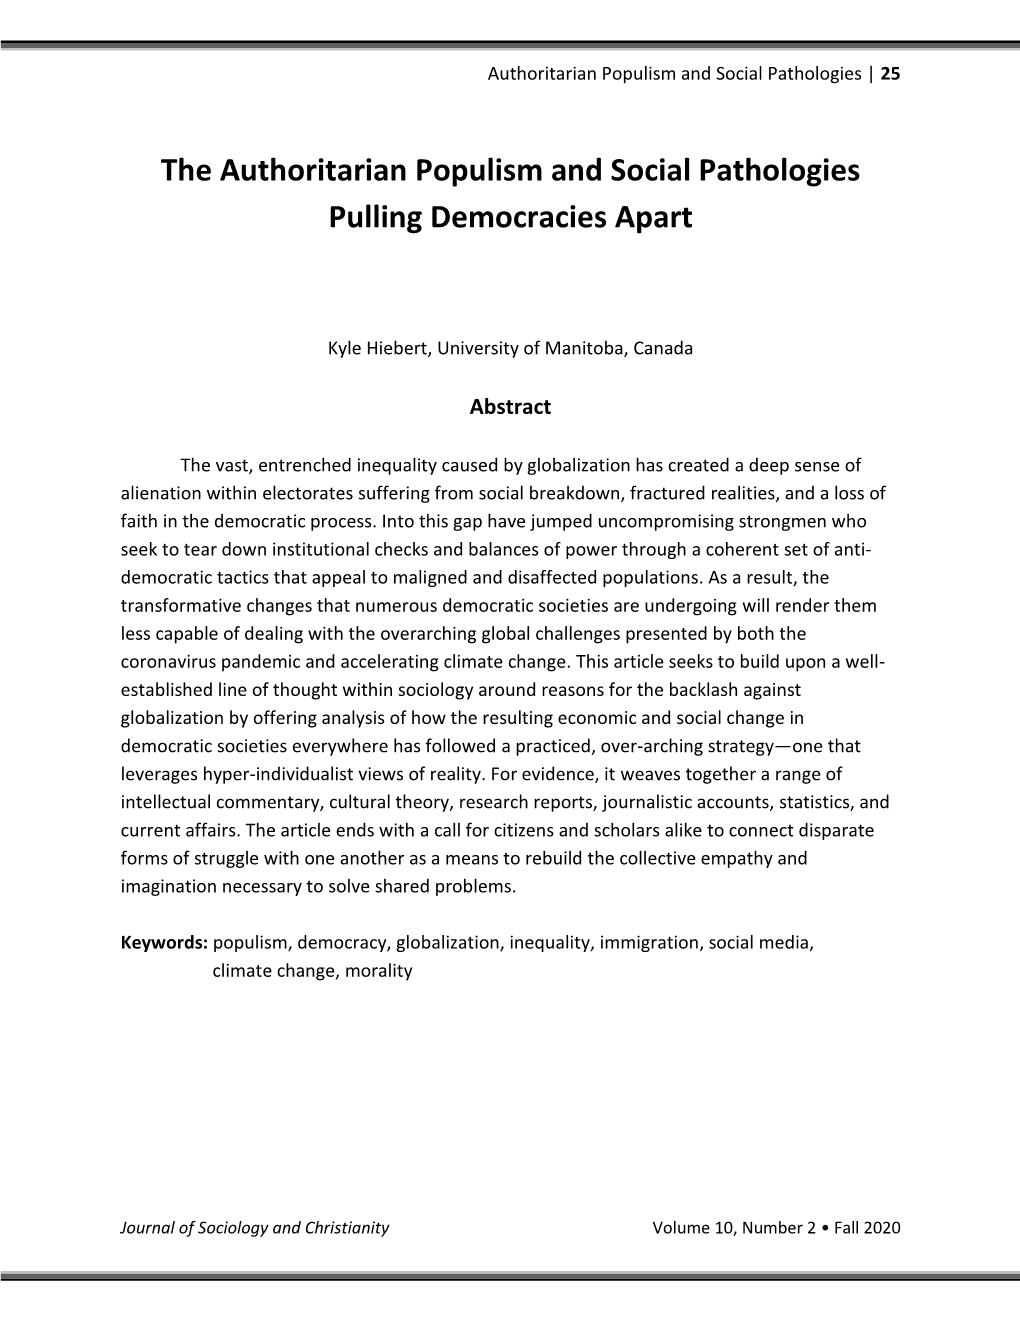 The Authoritarian Populism and Social Pathologies Pulling Democracies Apart